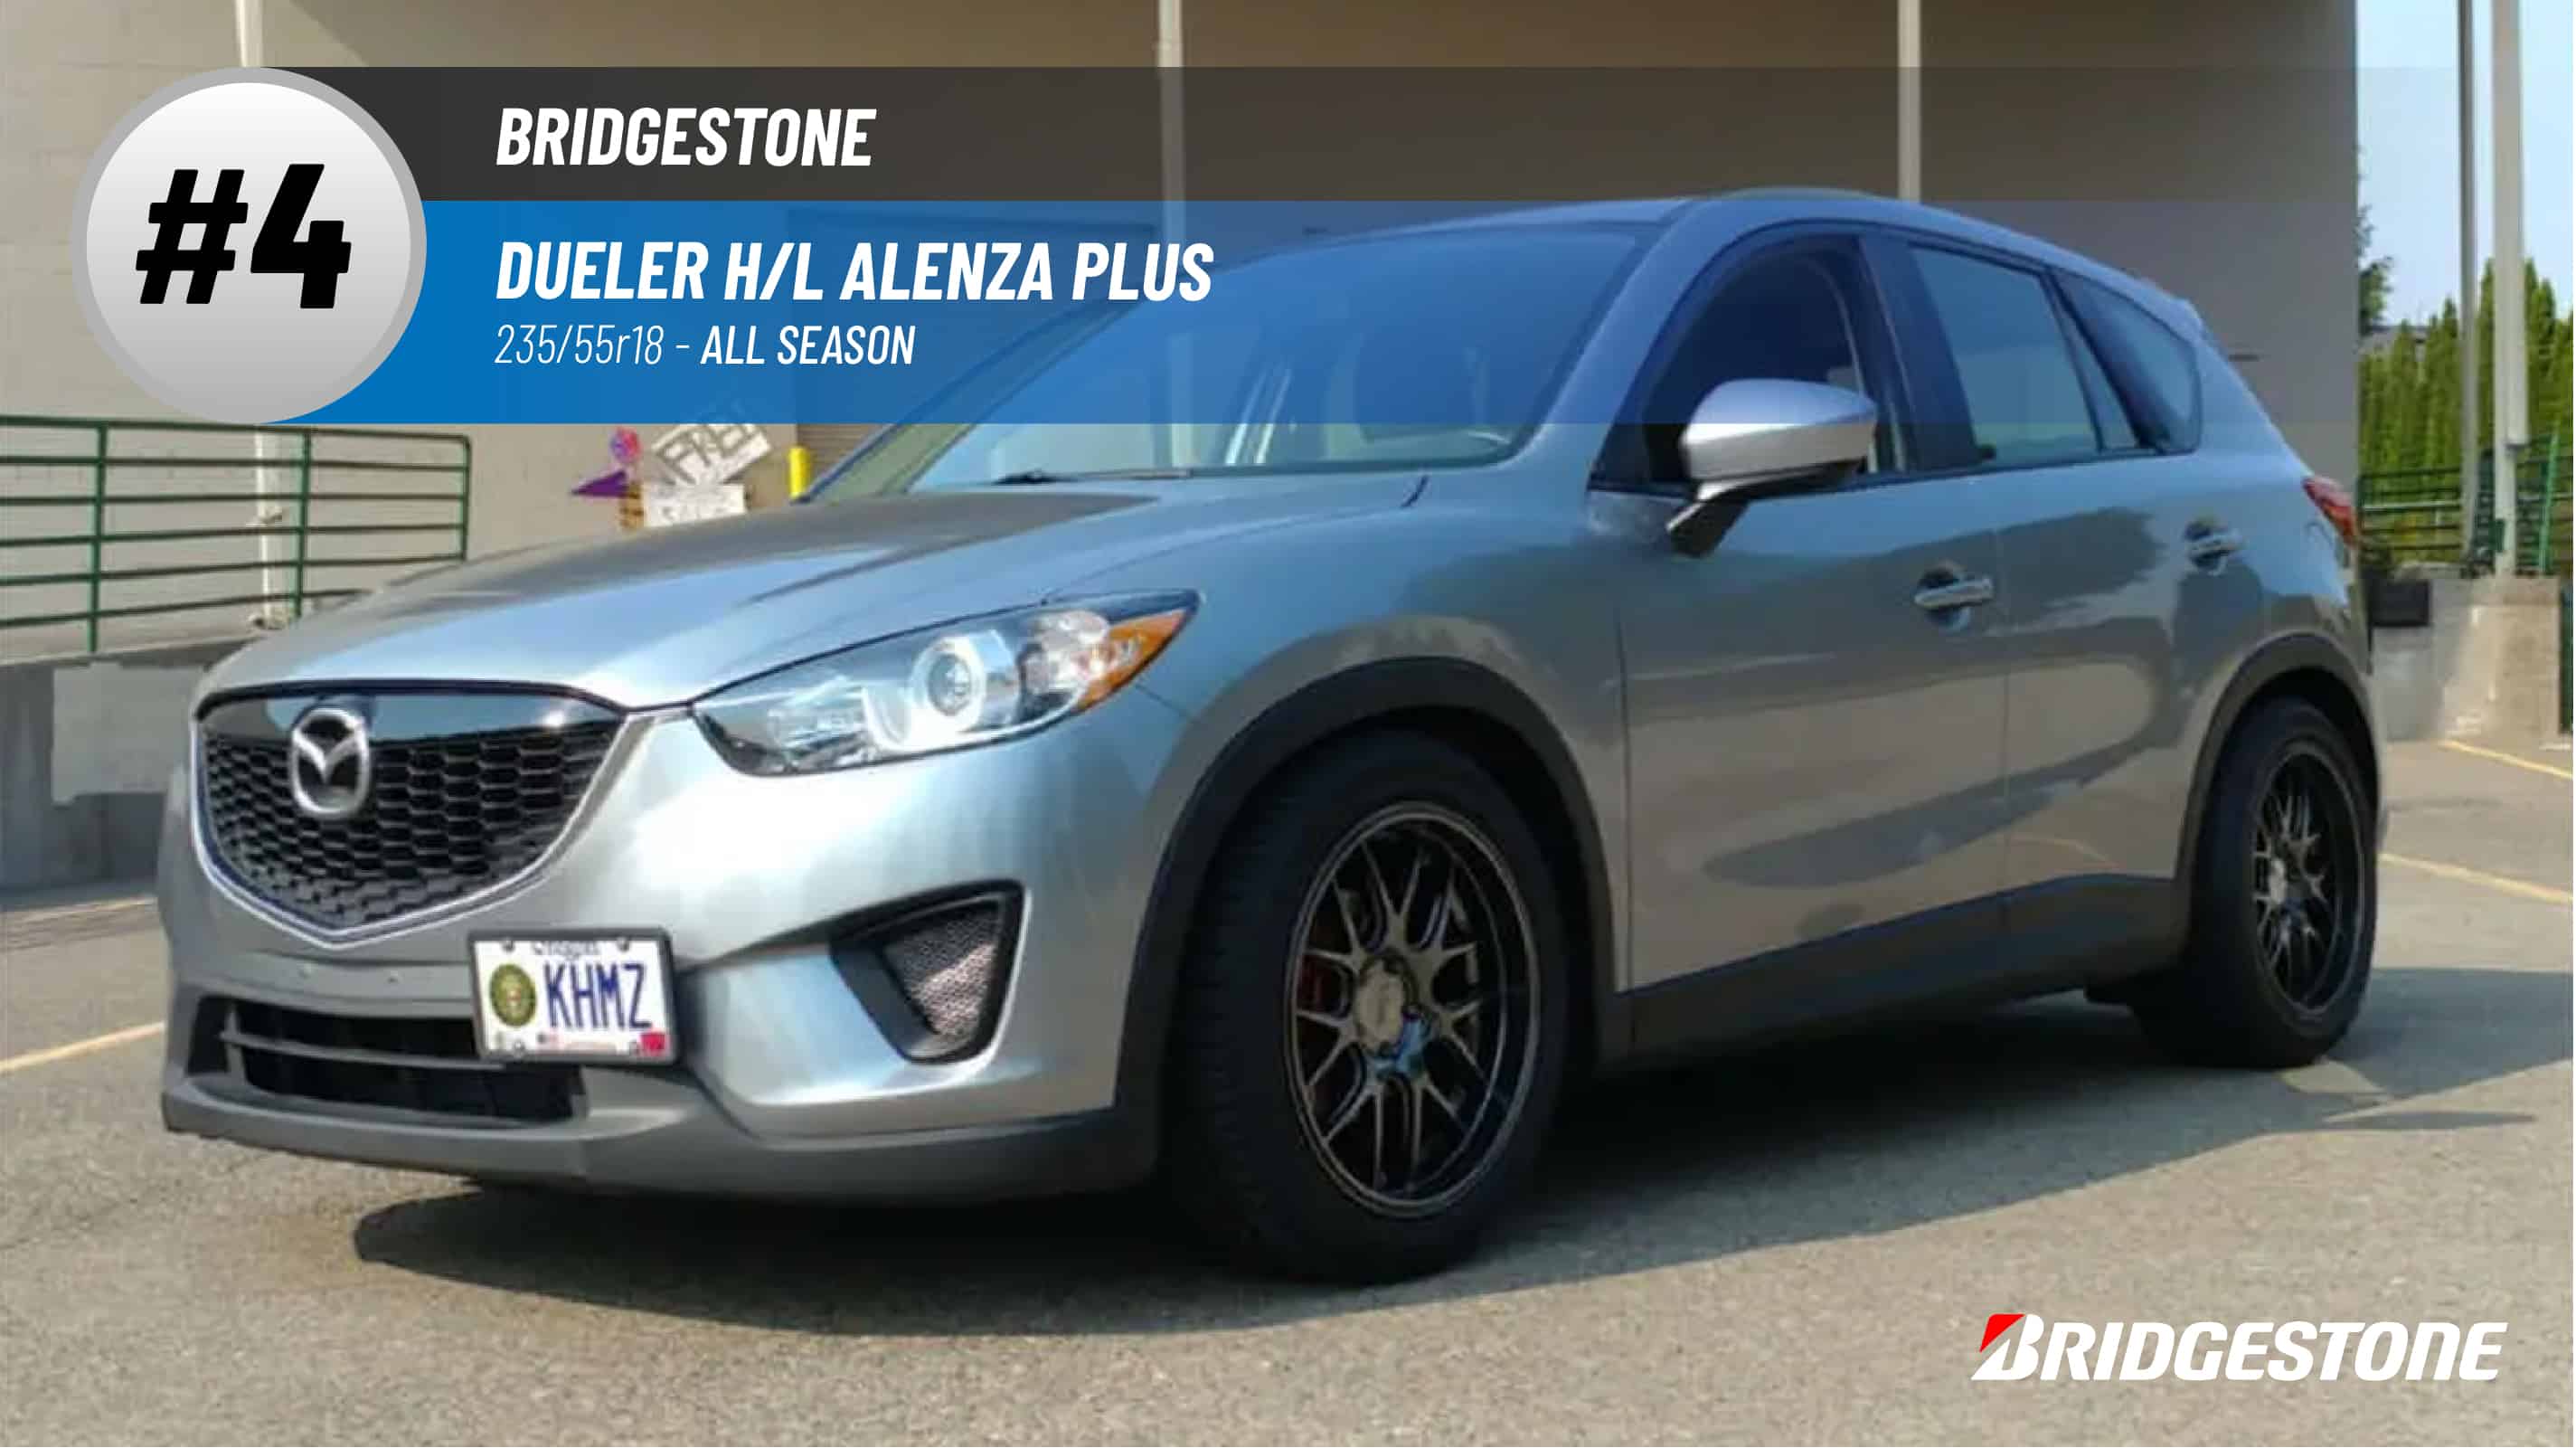 Top #4 All Season Tires: Bridgestone Dueler H/L Alenza Plus – best 235/55r18